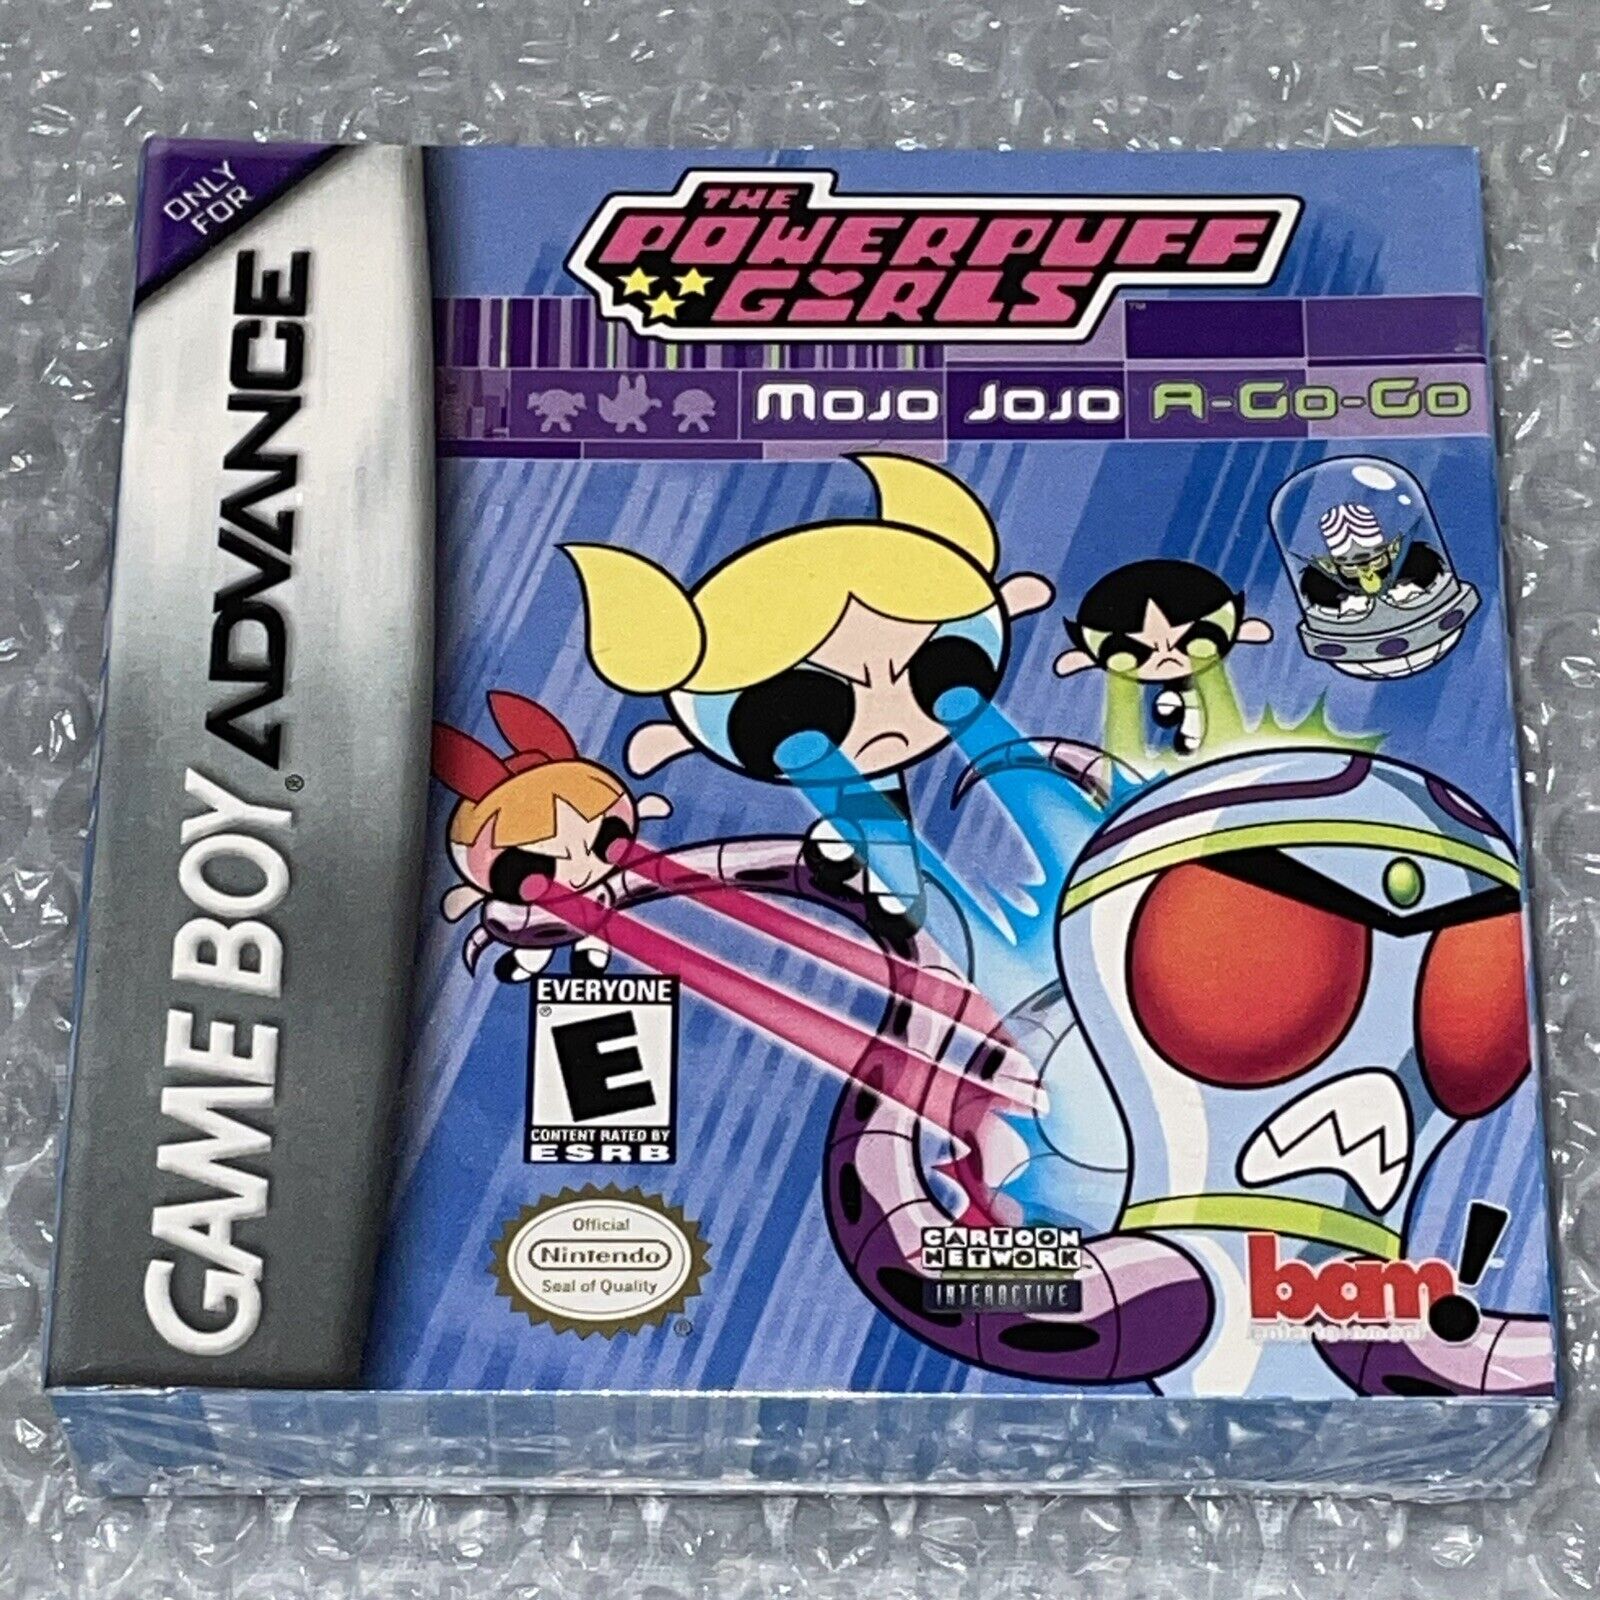 FACTORY SEALED The Powerfuff Girls Mojo Jojo A-Go-Go Game Boy Advance GBA NM